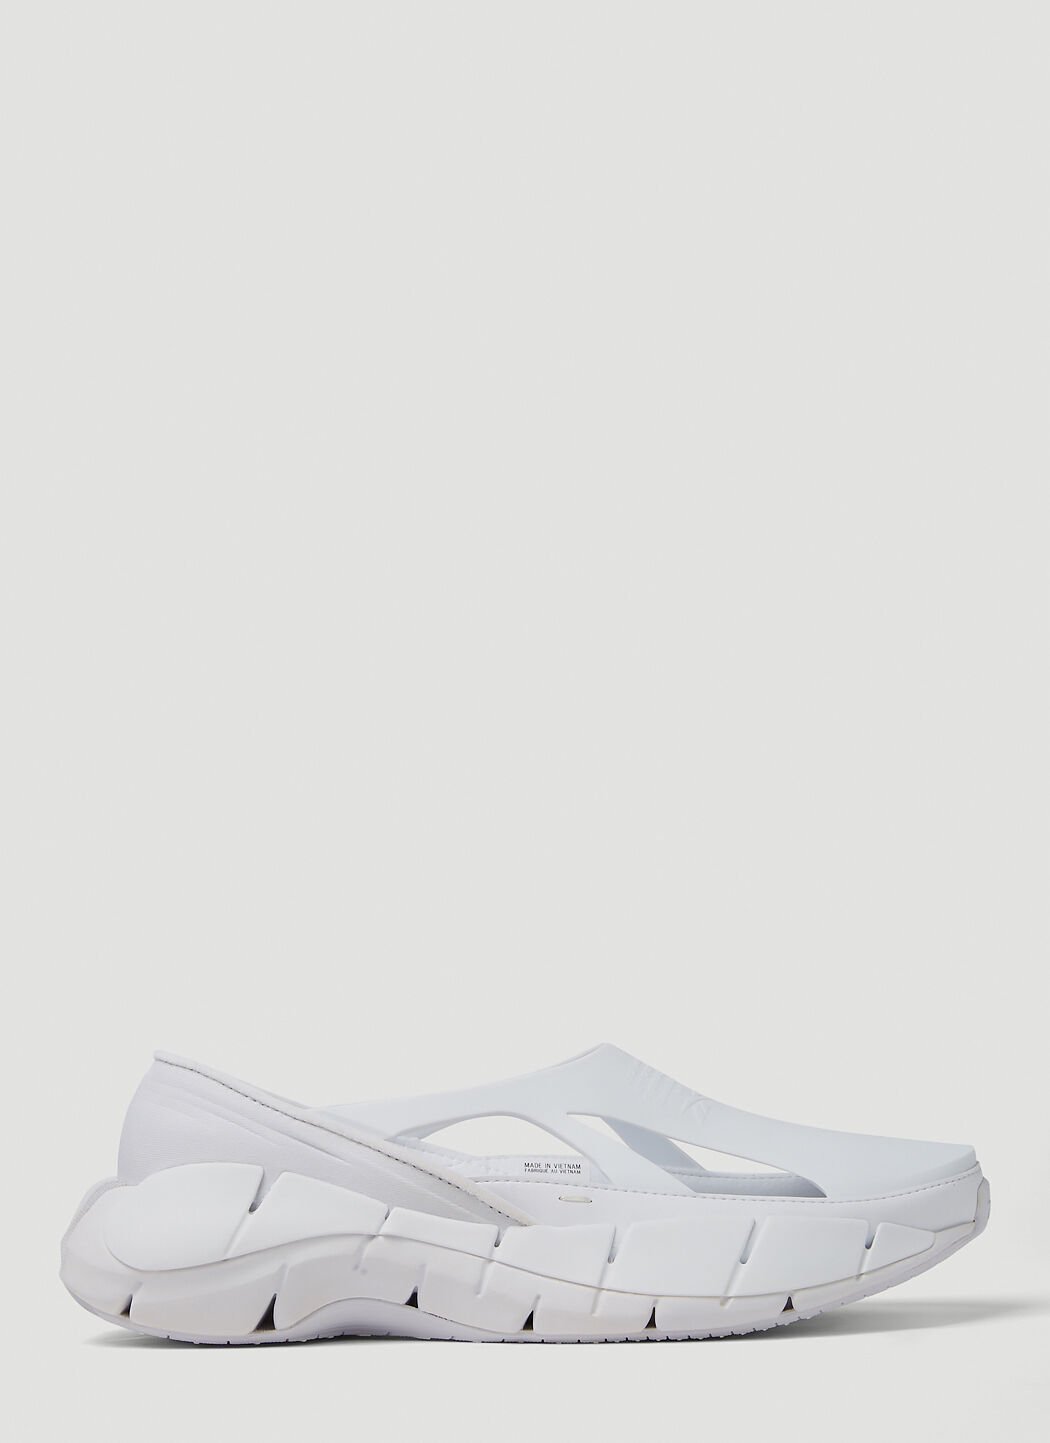 Maison Margiela x Reebok Tier 1 Croafer Sneakers White rmm0349001